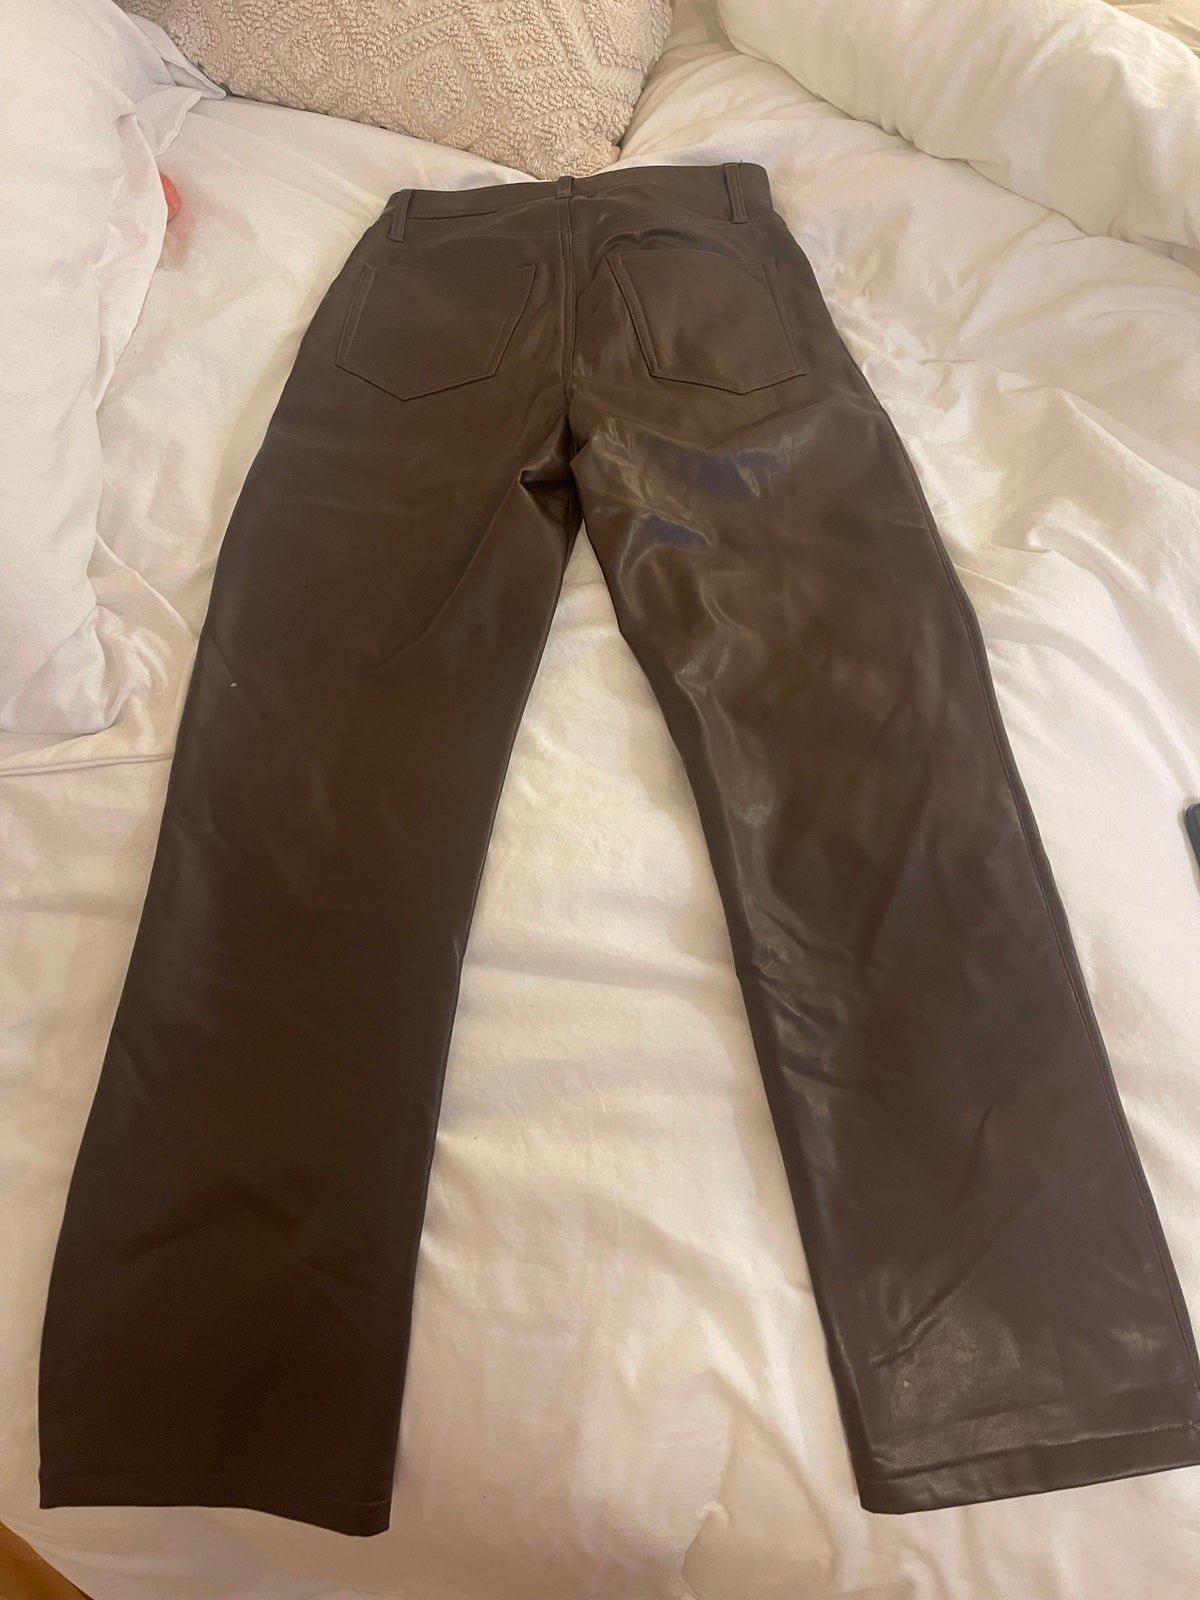 Stylish Abercrombie Faux Leather Pants i6R5L9JgL Cool